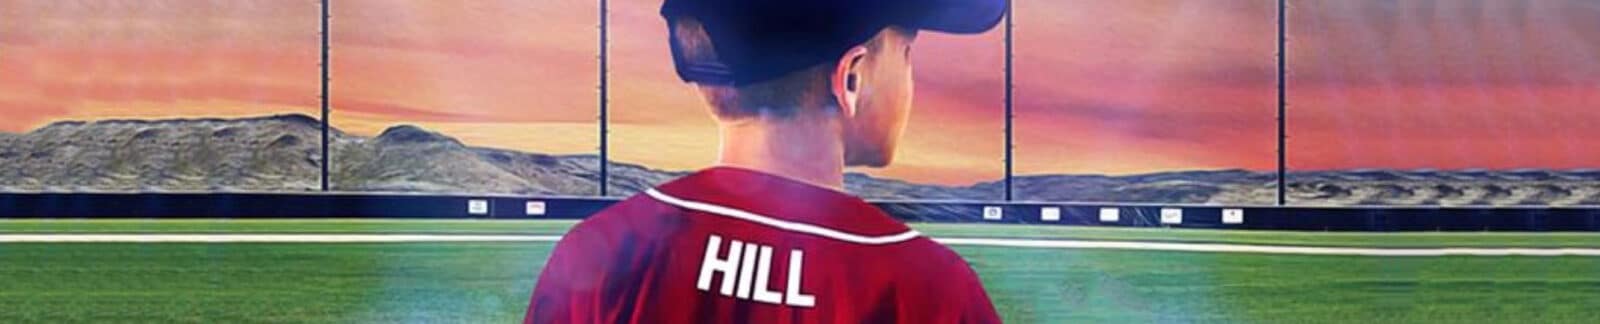 The Hill, baseball movie header